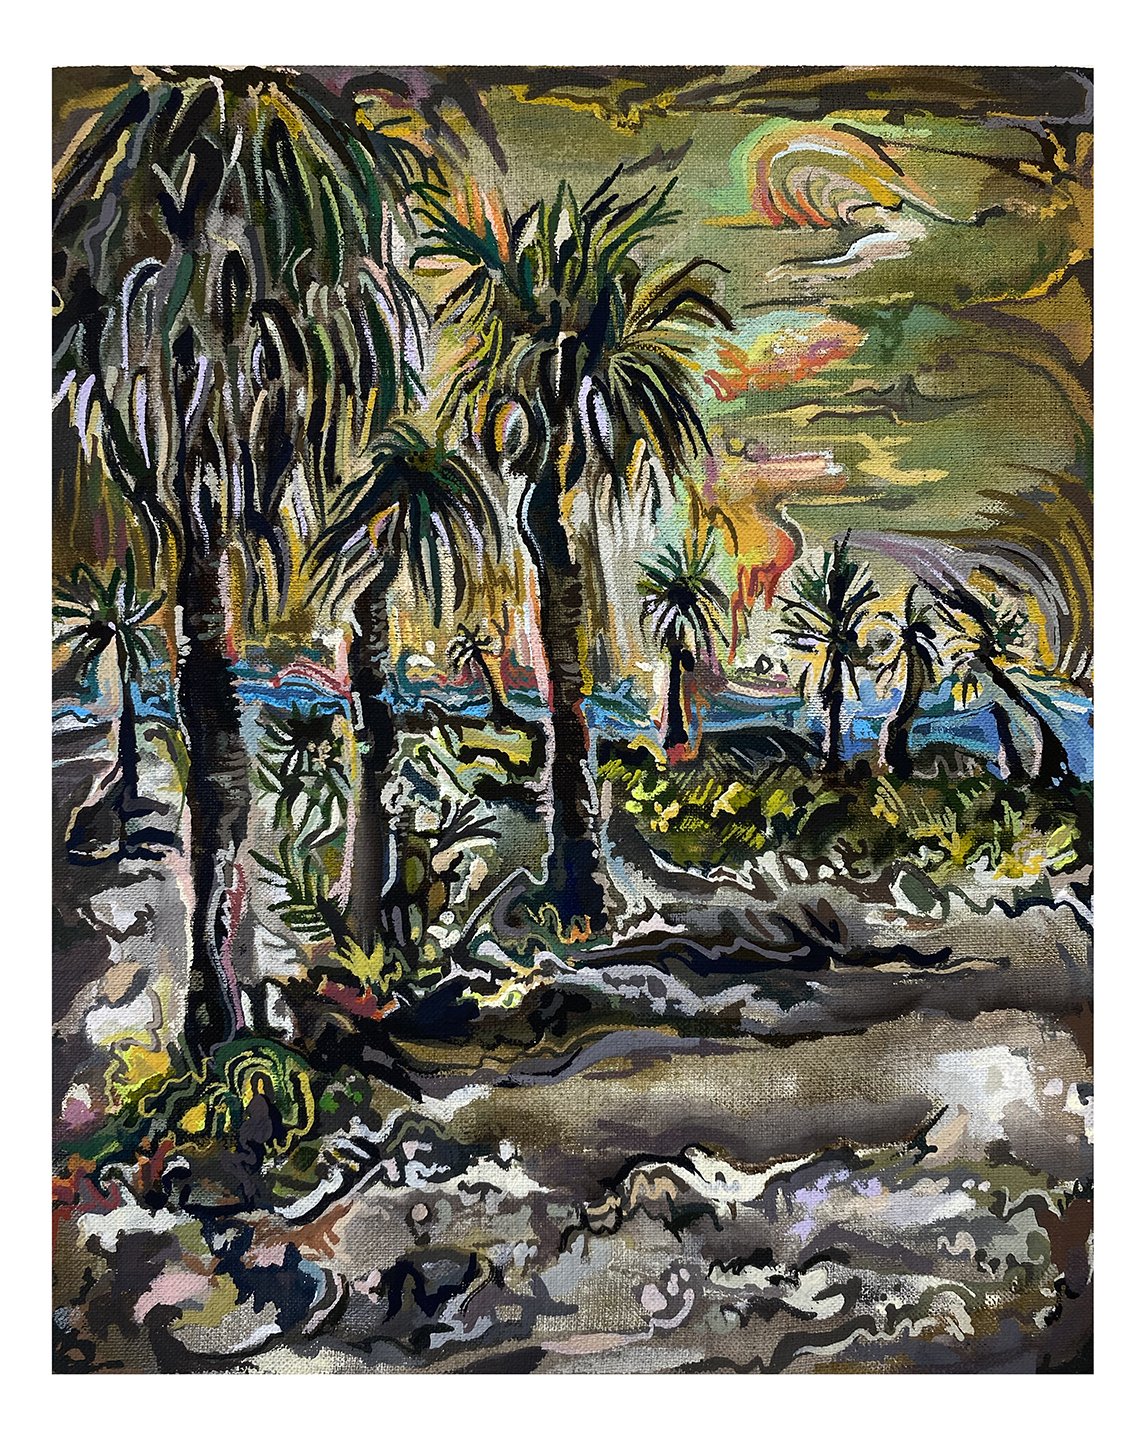  Maria Calandra, Palm Trees near Tarpon Springs, 2021, acrylic on linen over panel, 10 x 8 inches 